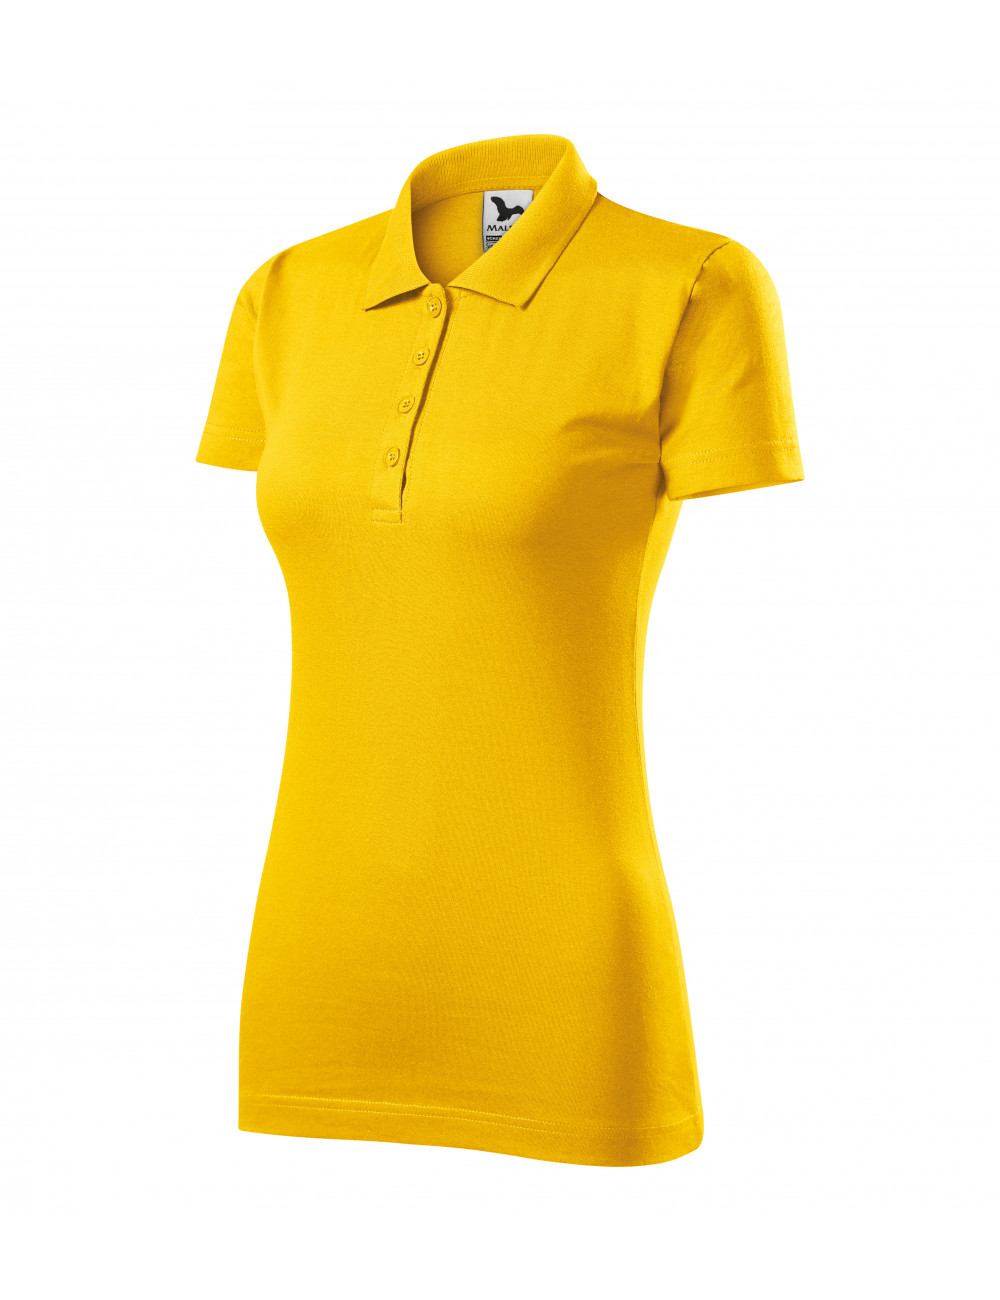 Women`s single j polo shirt. 223 yellow Adler Malfini